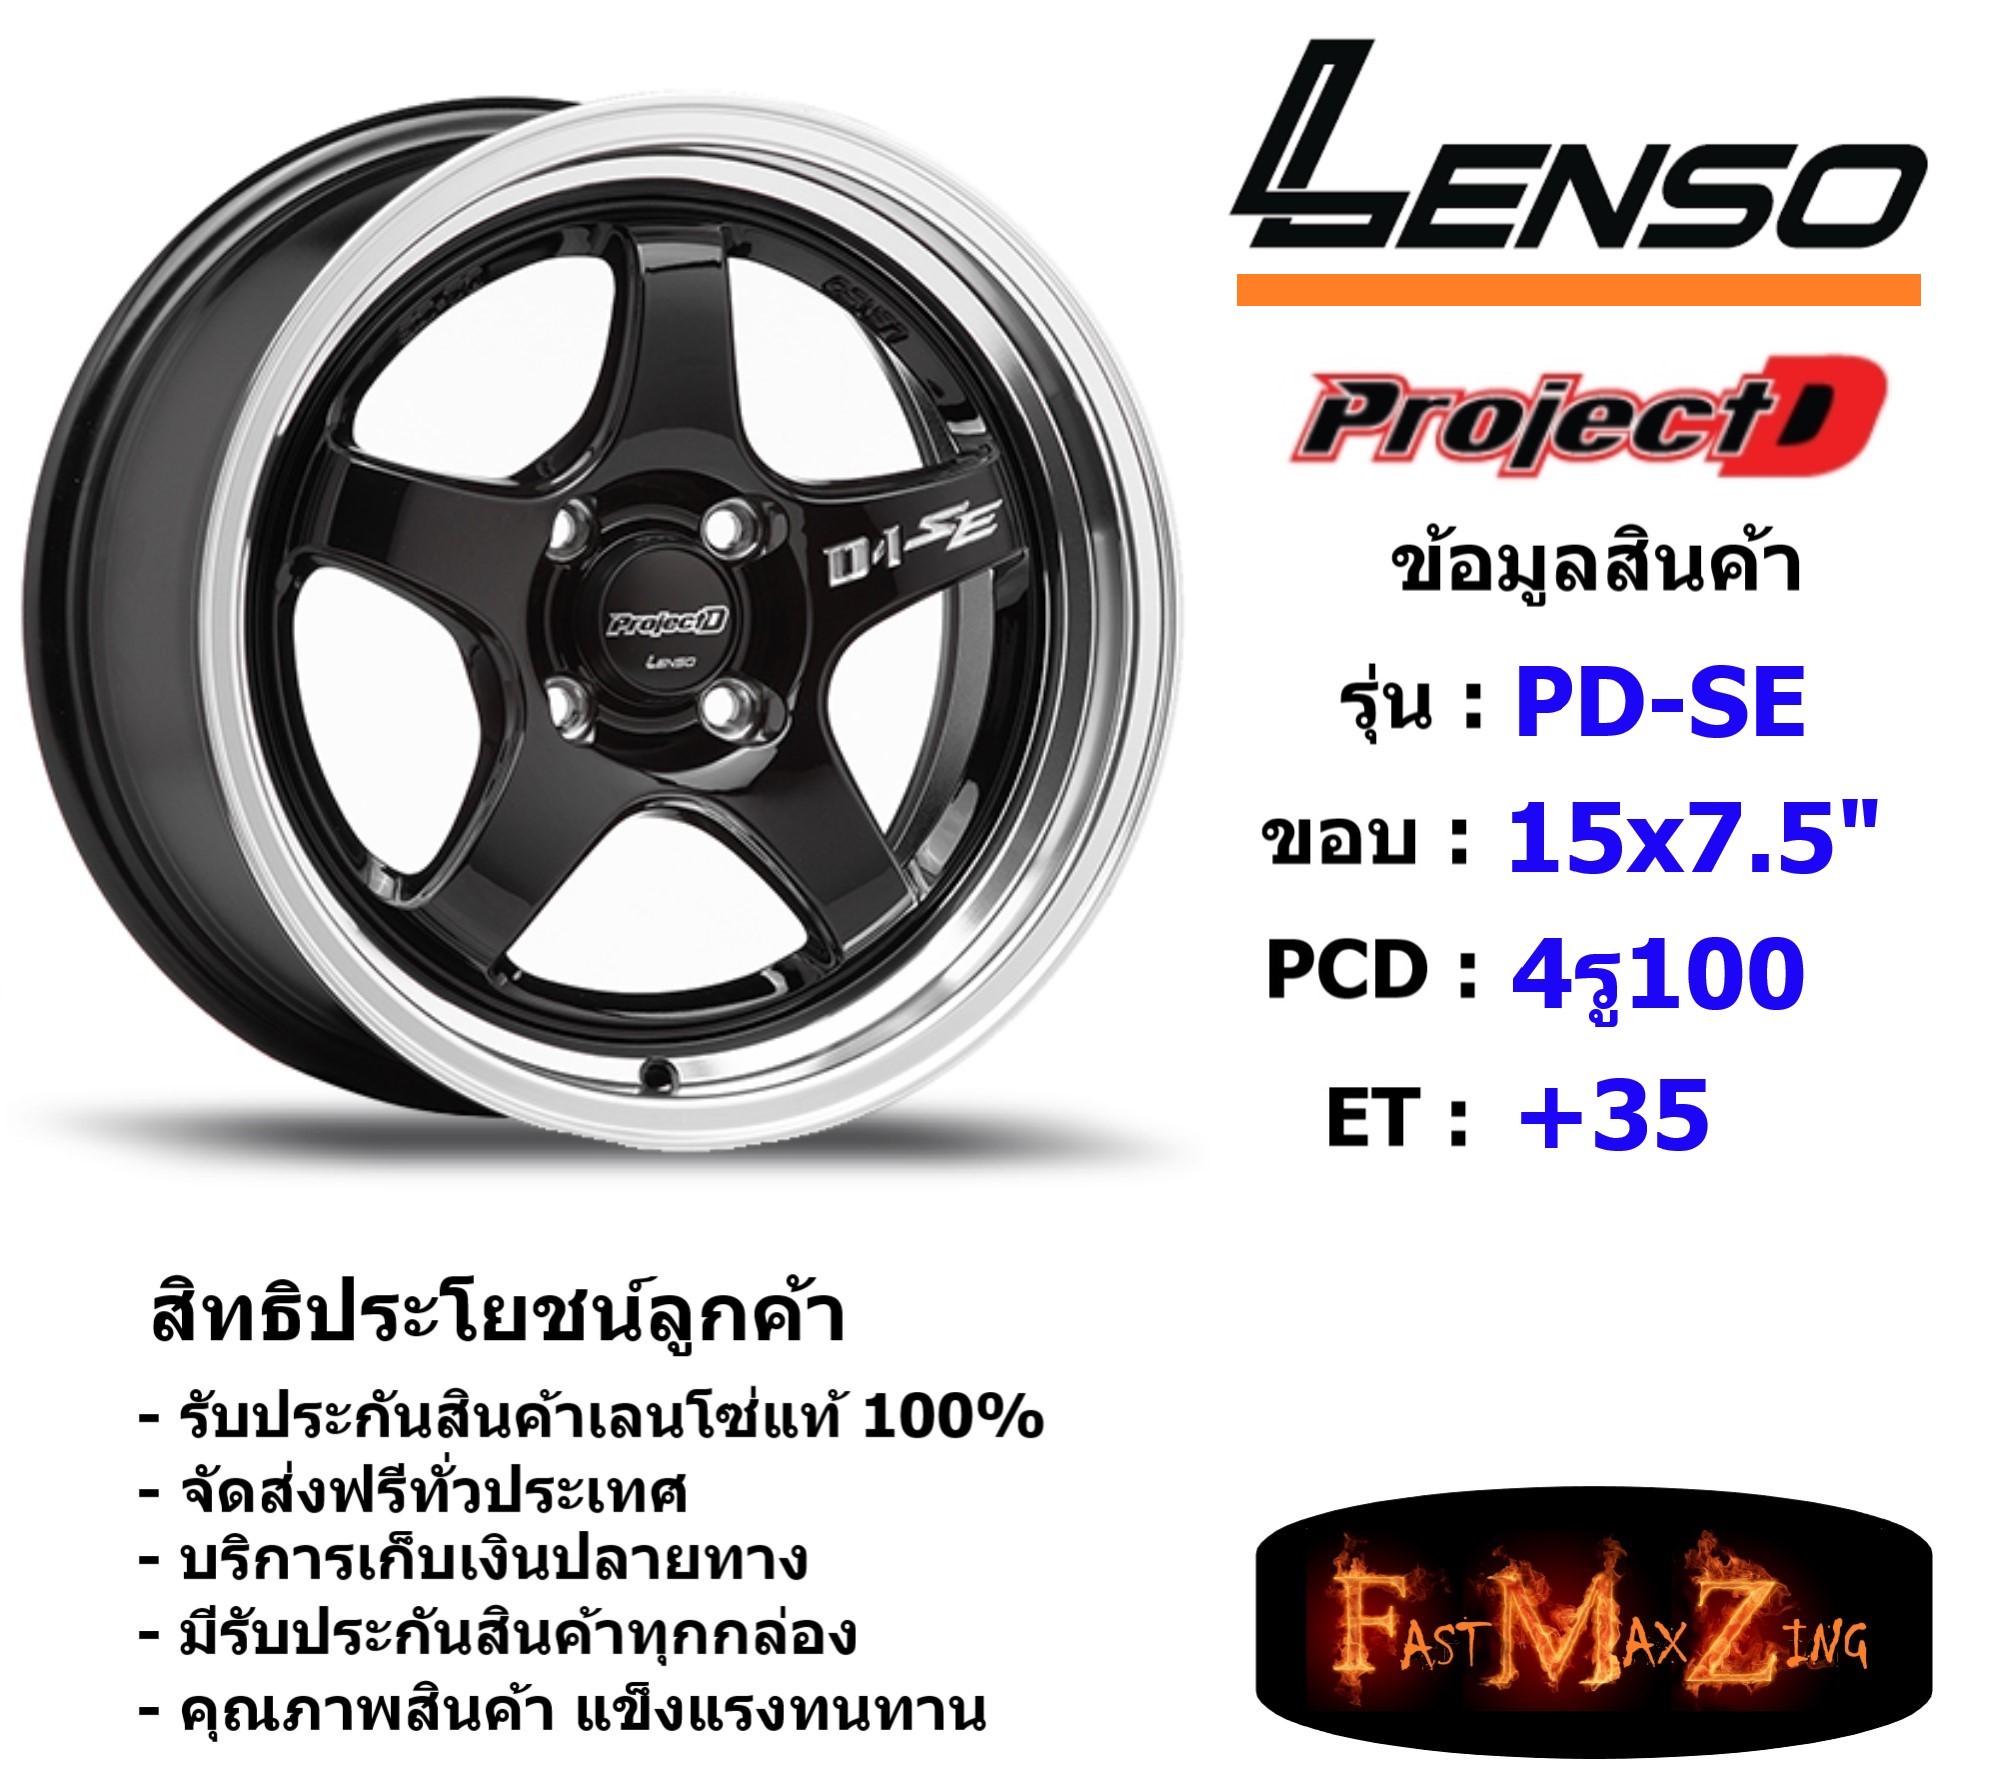 Lenso Wheel ProjectD D-1SE (เก๋ง) ขอบ 15x7.5